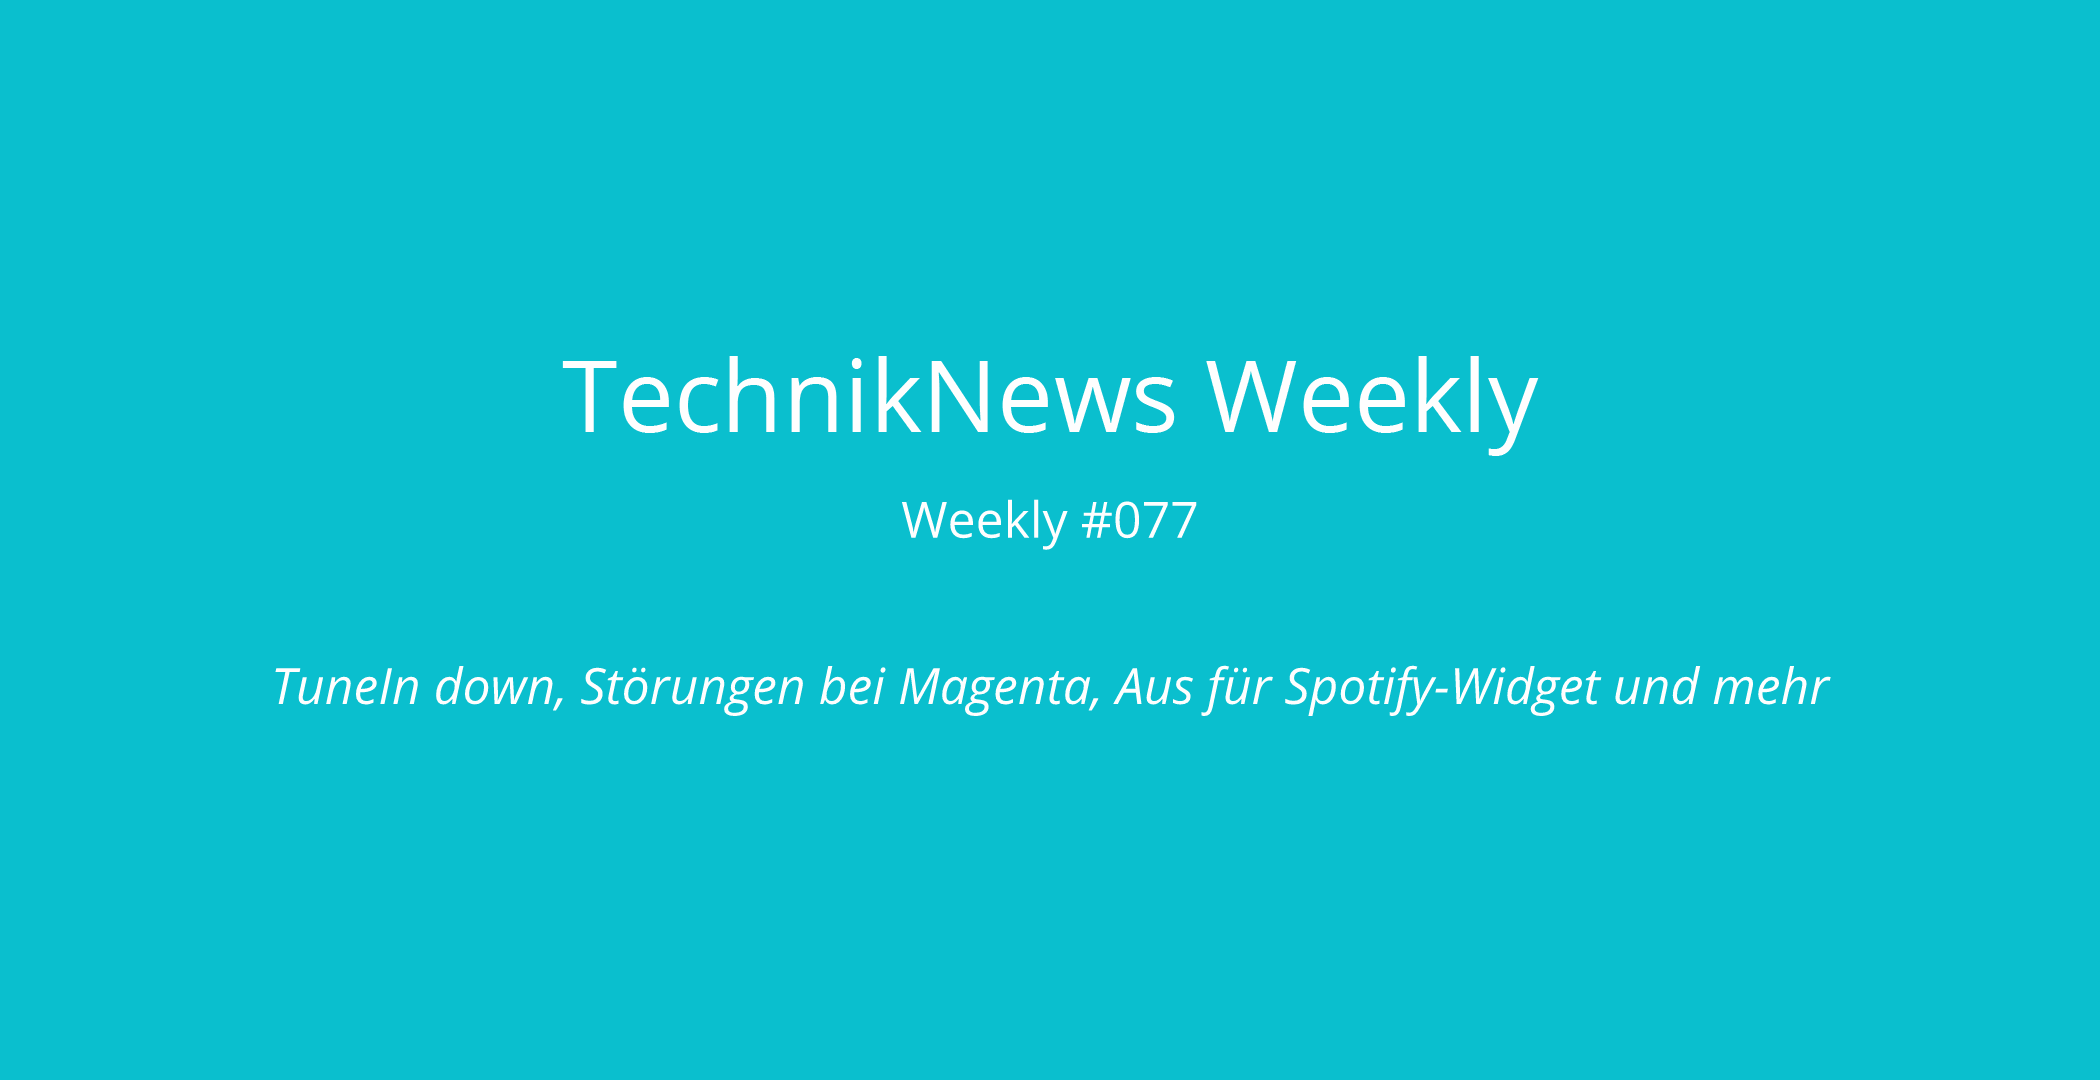 TechnikNews Weekly #077